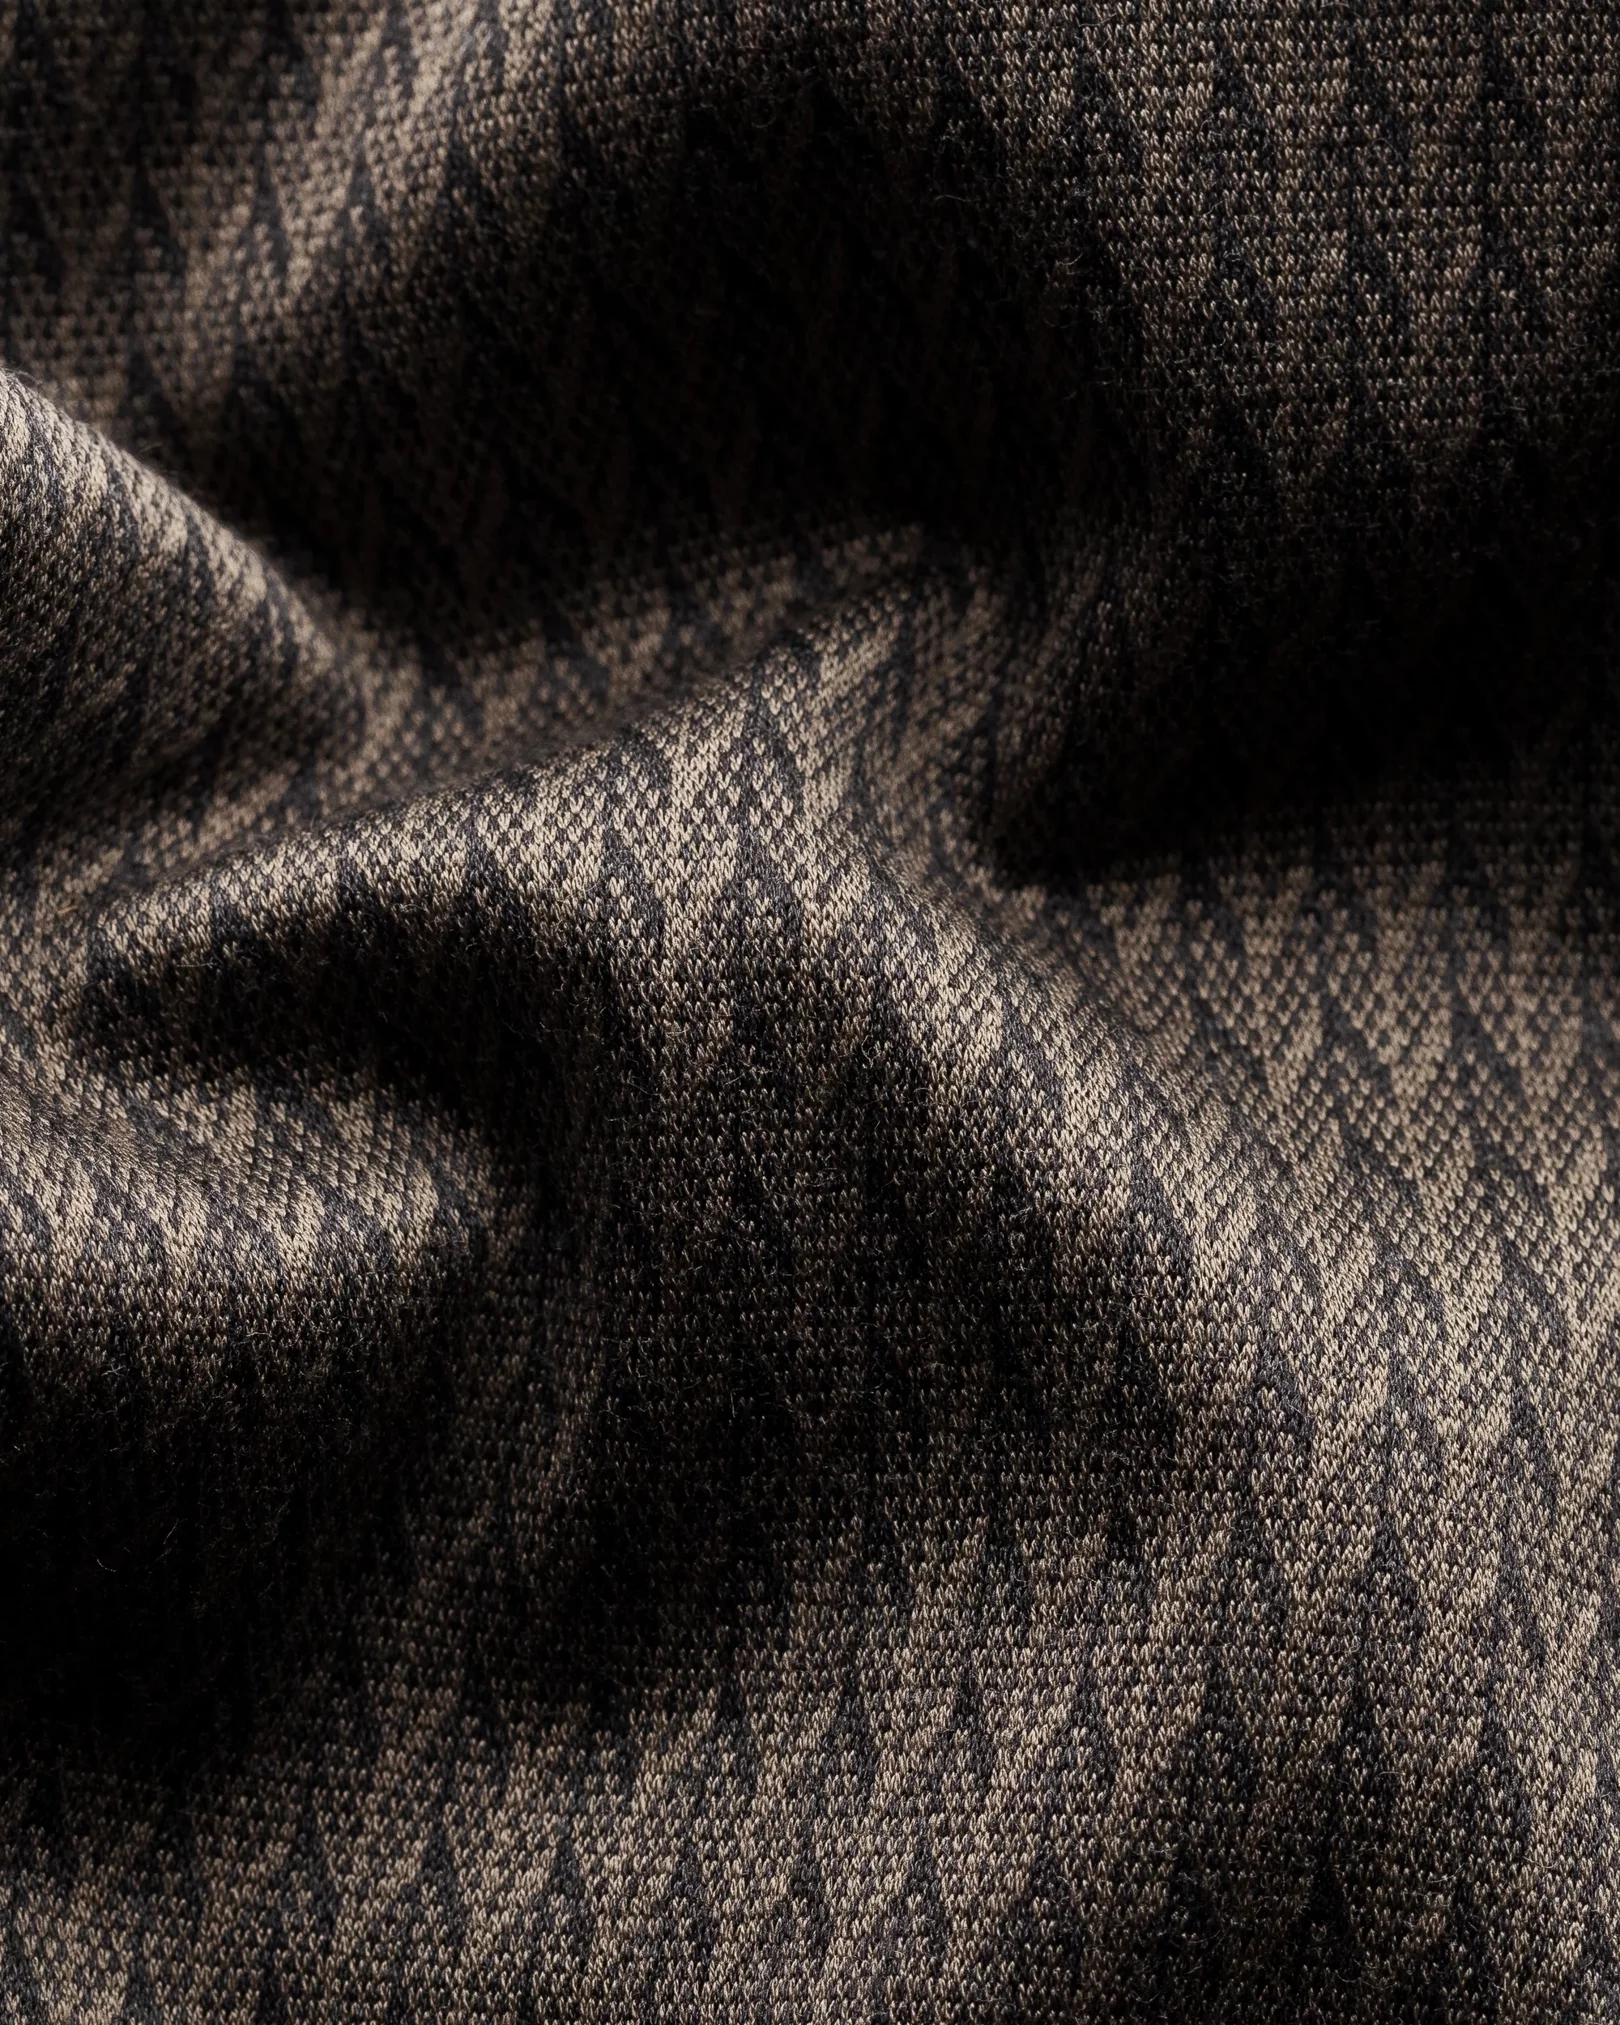 Eton - mid grey jacquard knit